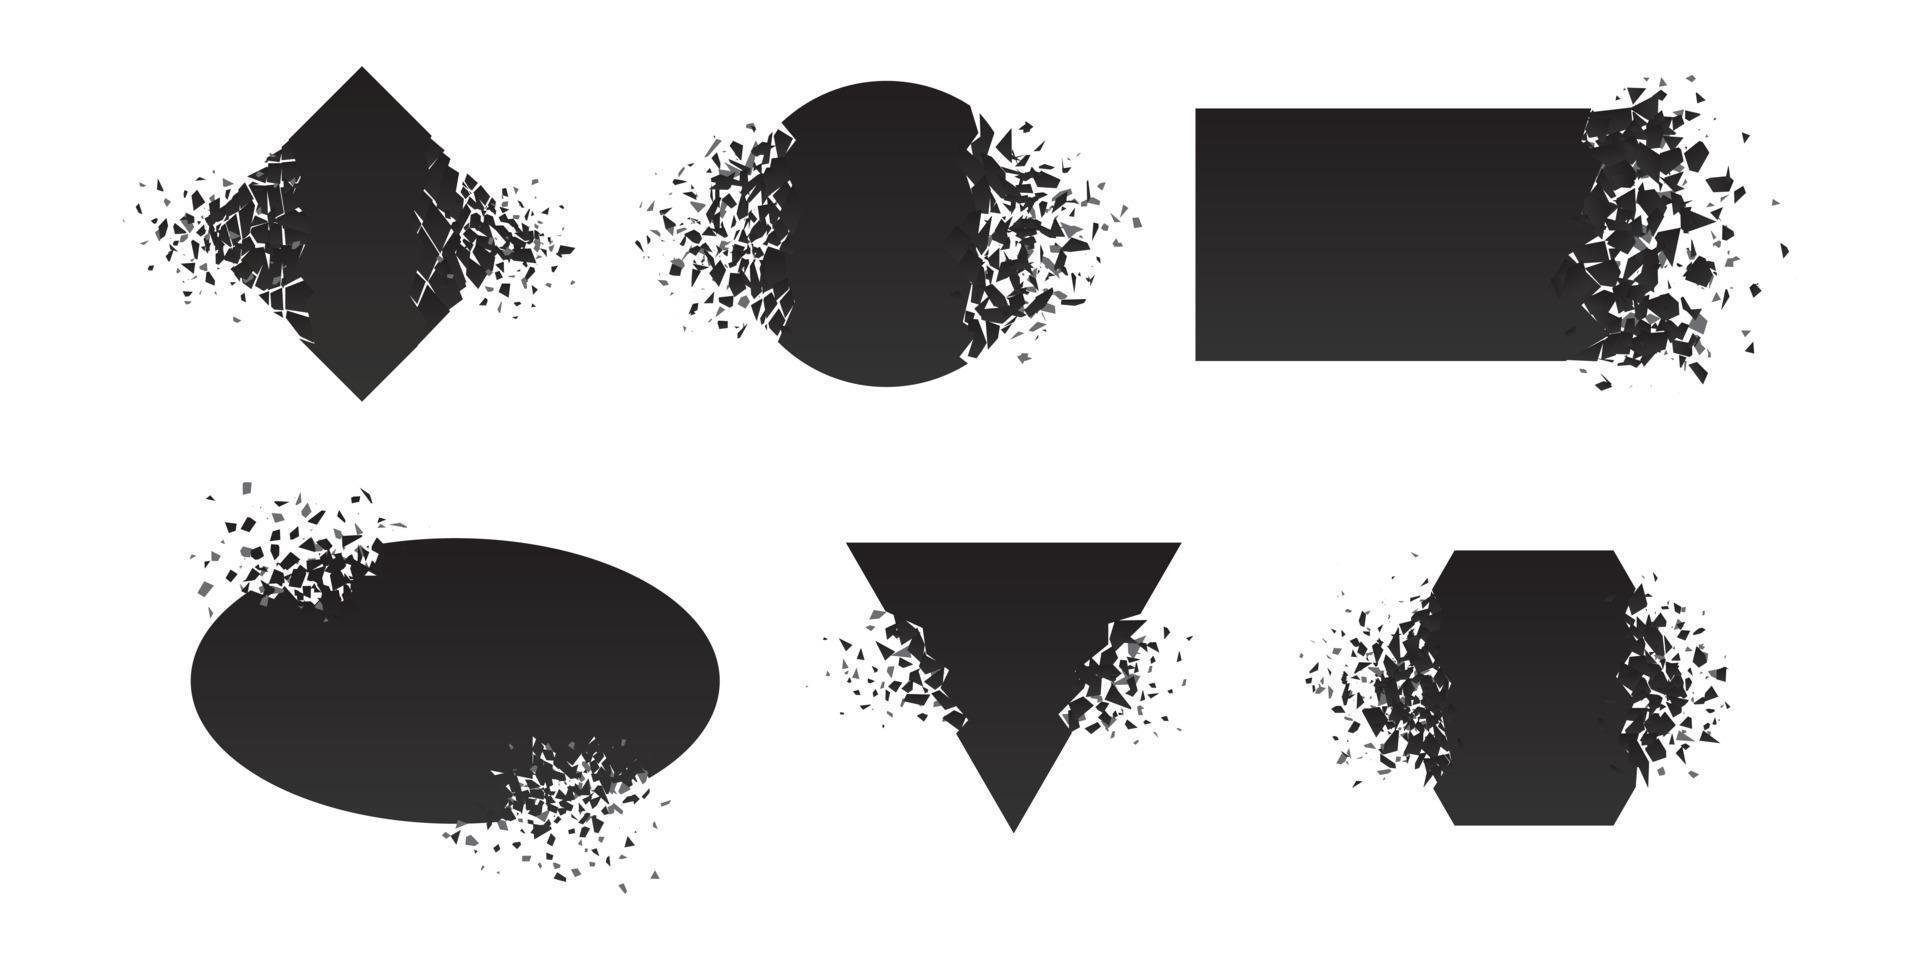 Shape shattered and explodes flat style design vector illustration set isolated on white background